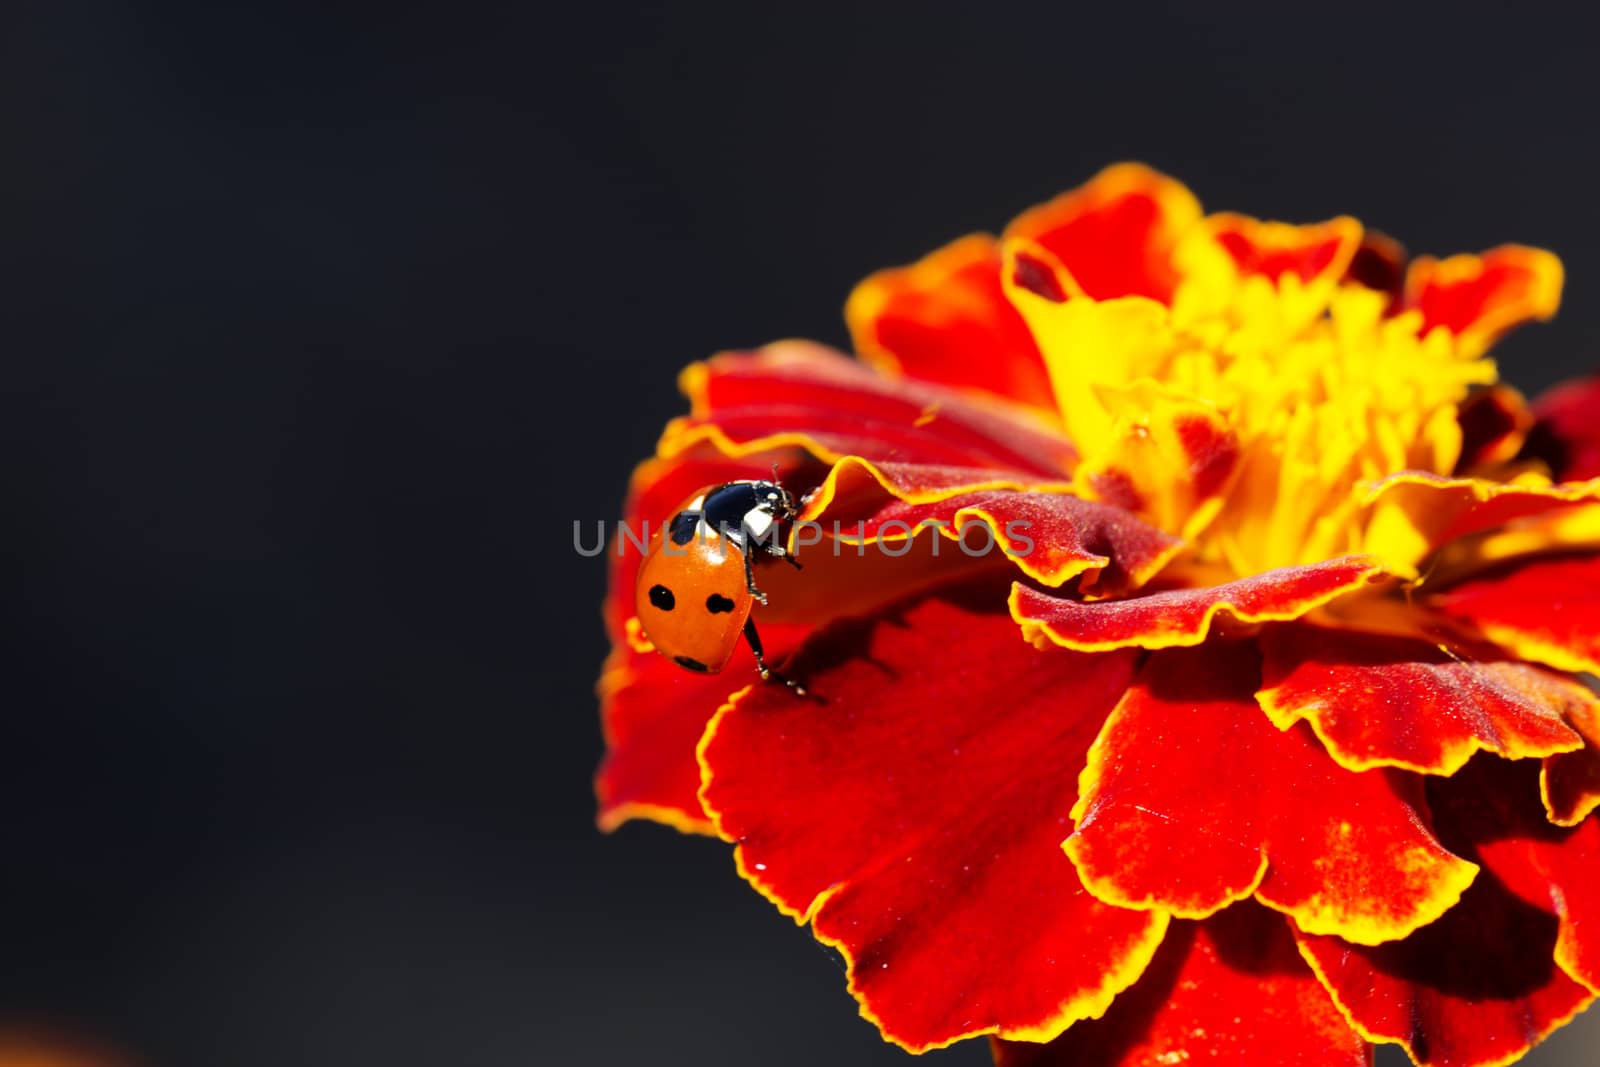 ladybird on an orange flower. Ladybug on orange flower petals